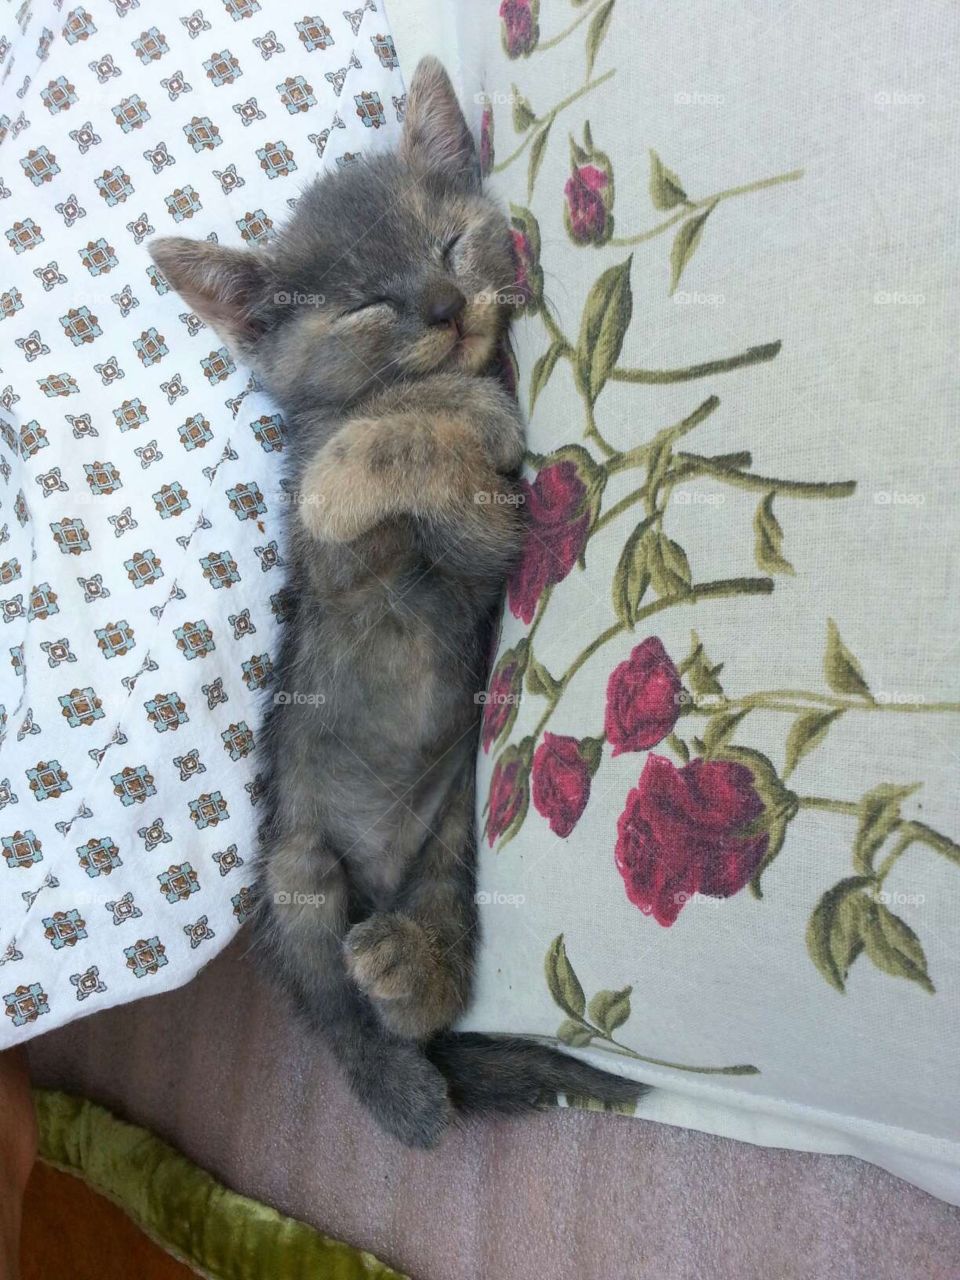 Cat. Sleeping beauty